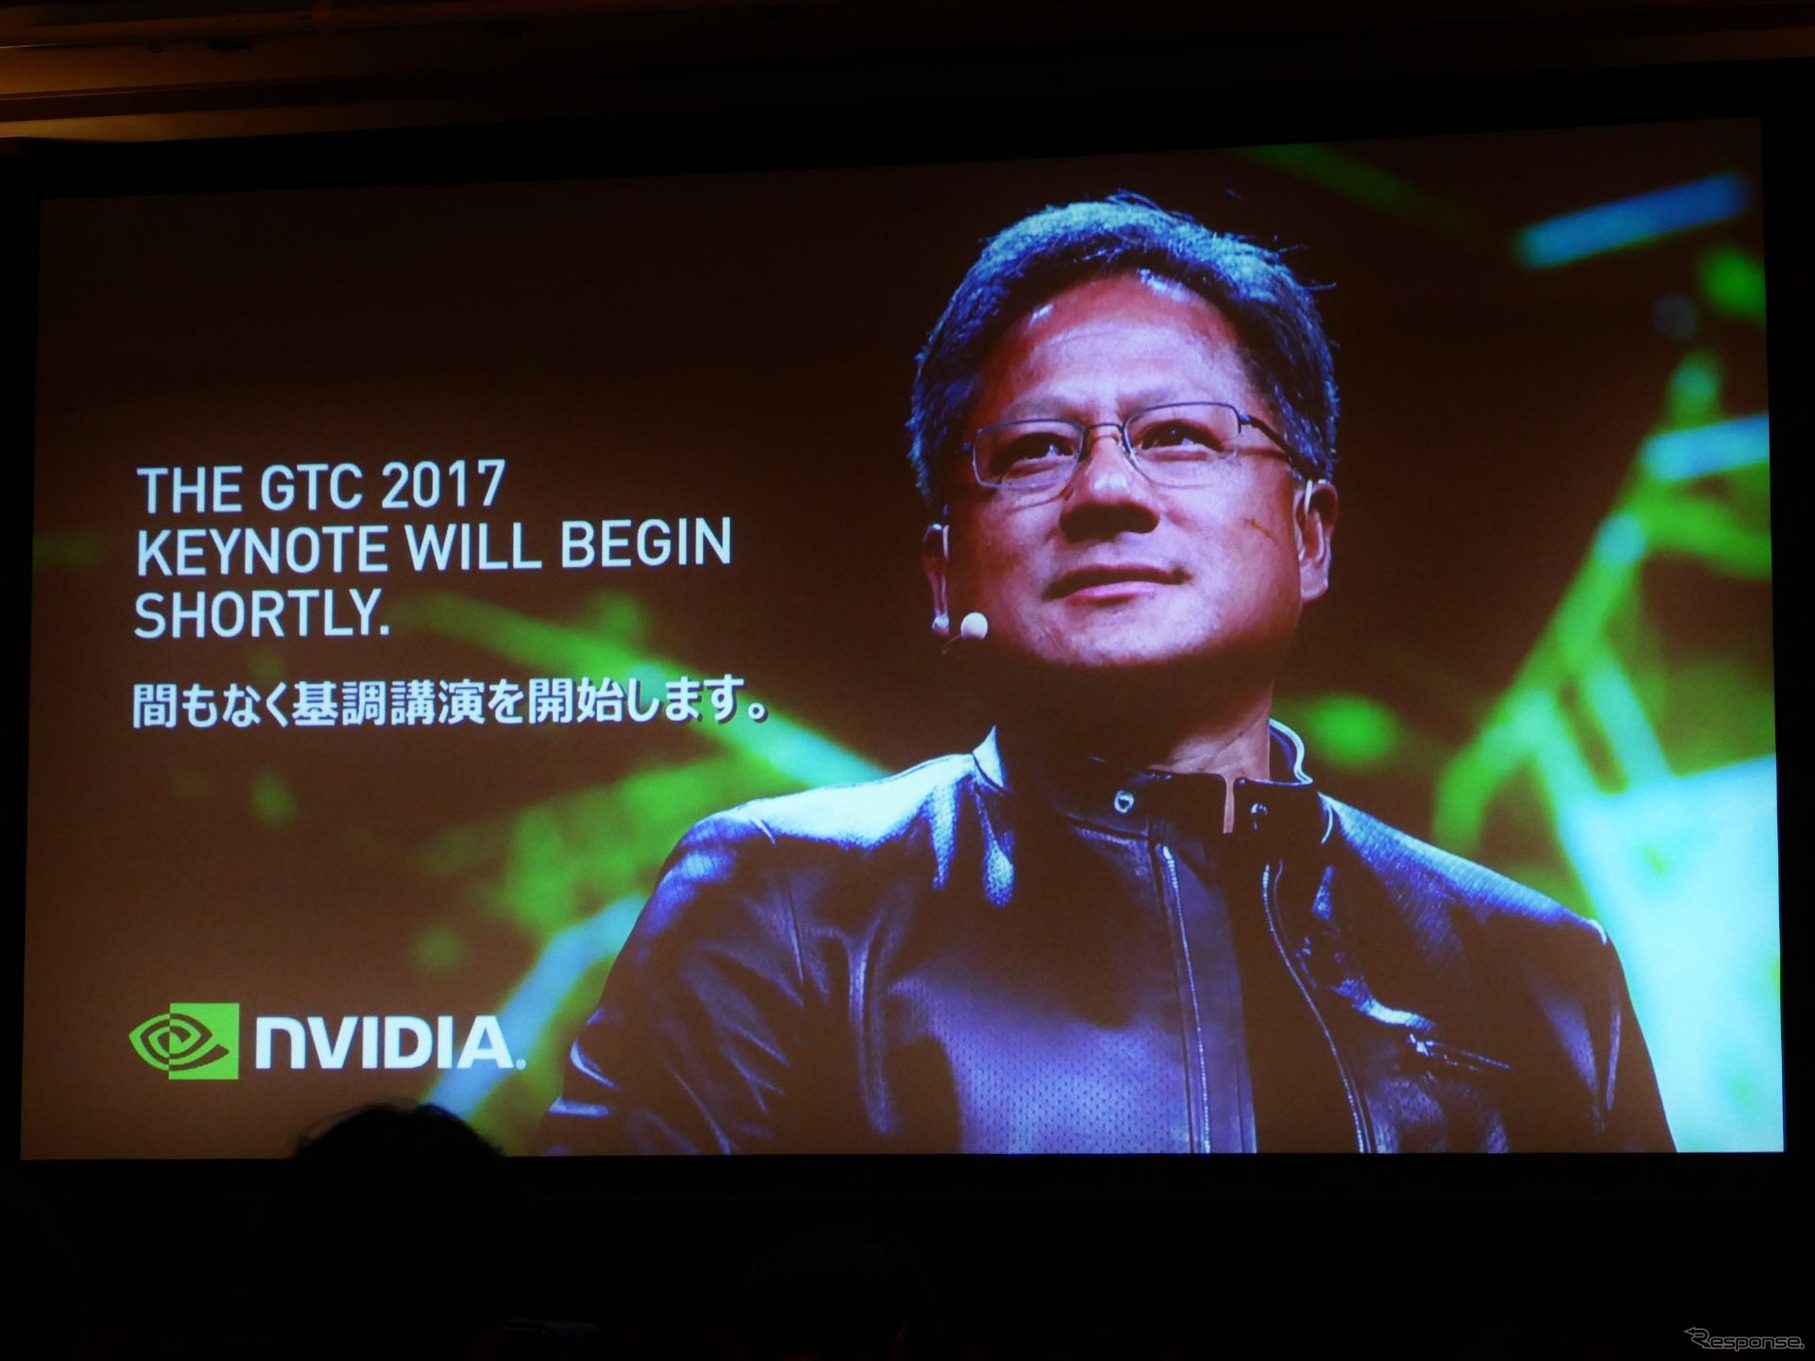 「GTC Japan 2017」NVIDIA CEOジェンスン・ファン氏基調講演より。ファン氏の講演は超満員となり、記者はサテライト会場での観覧となった。